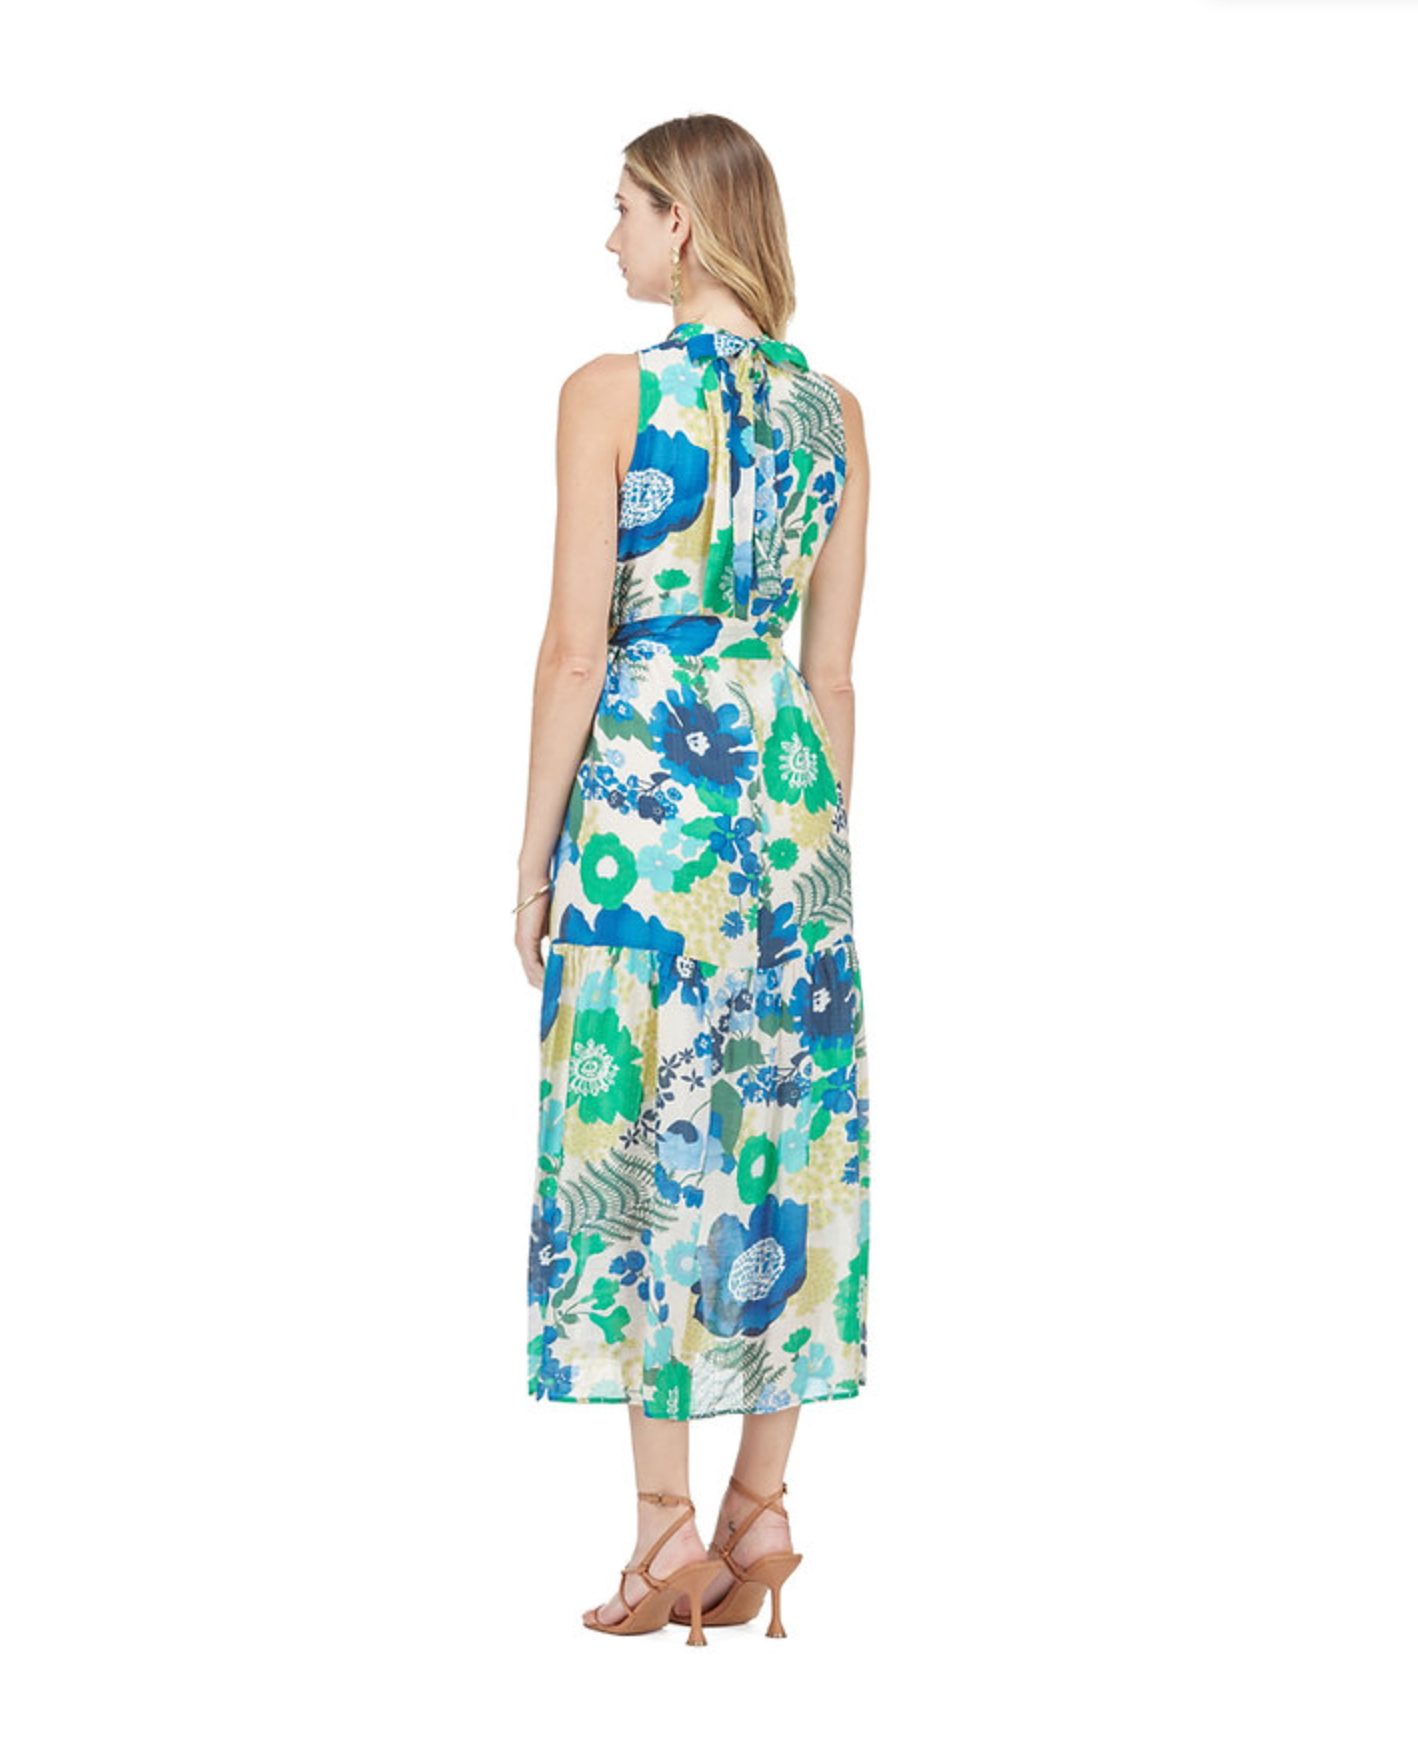 Print Maxi Dress in Dahilias - The French Shoppe